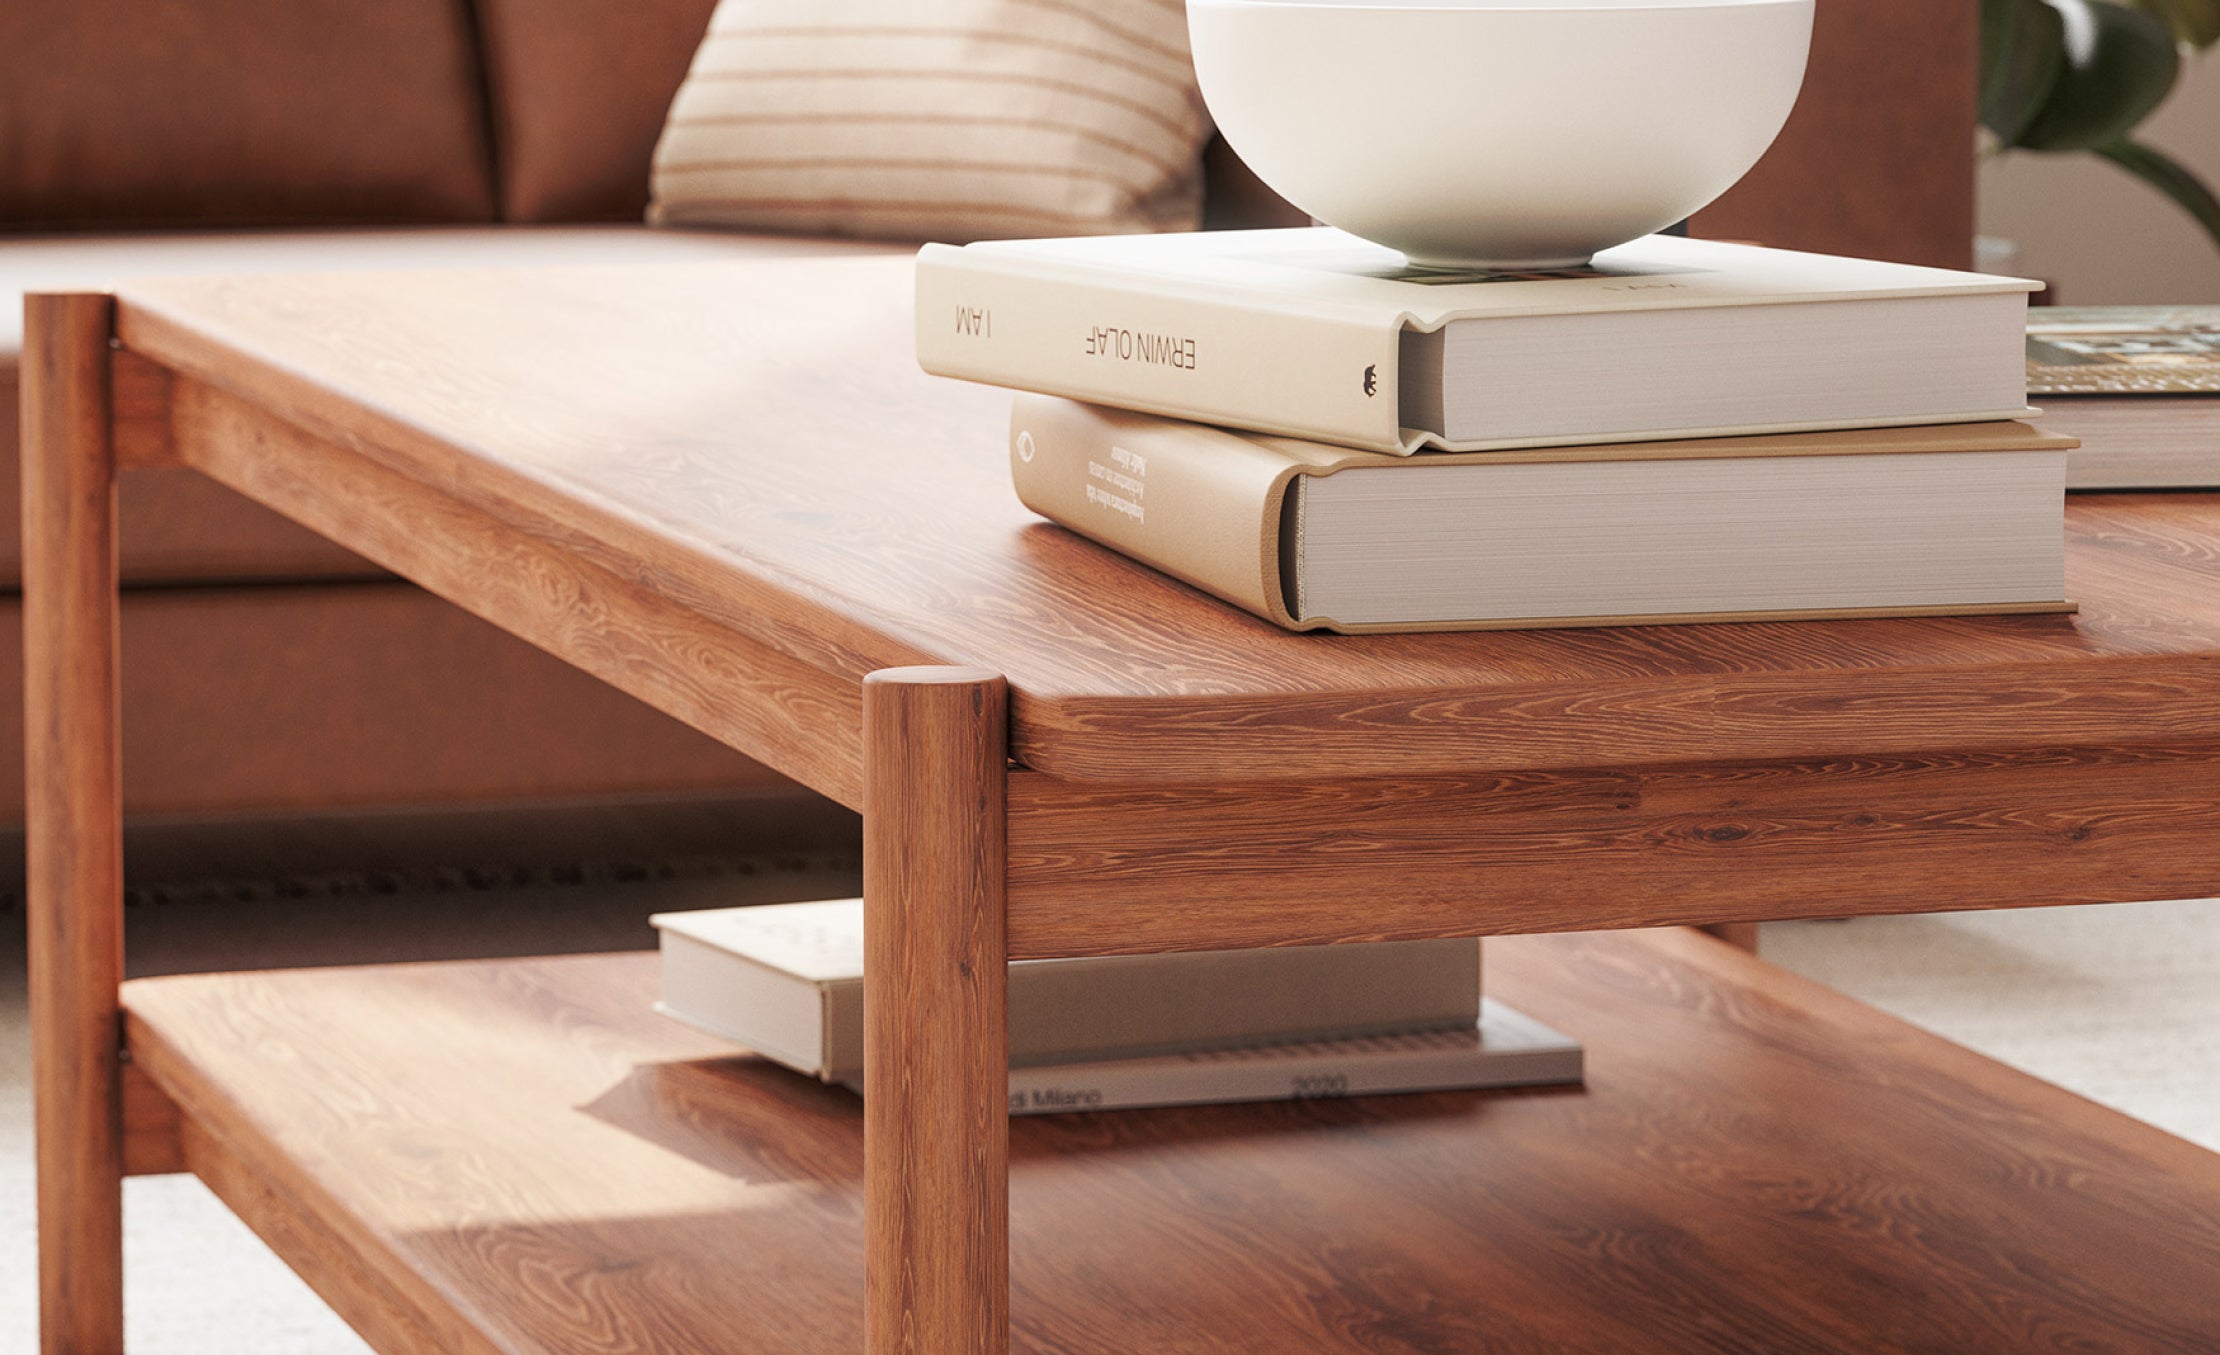 Iris 3 Tier Shelf by Medley - Maple or Walnut Domestic Harwood -Sustainable Mid-Century Modern Furniture